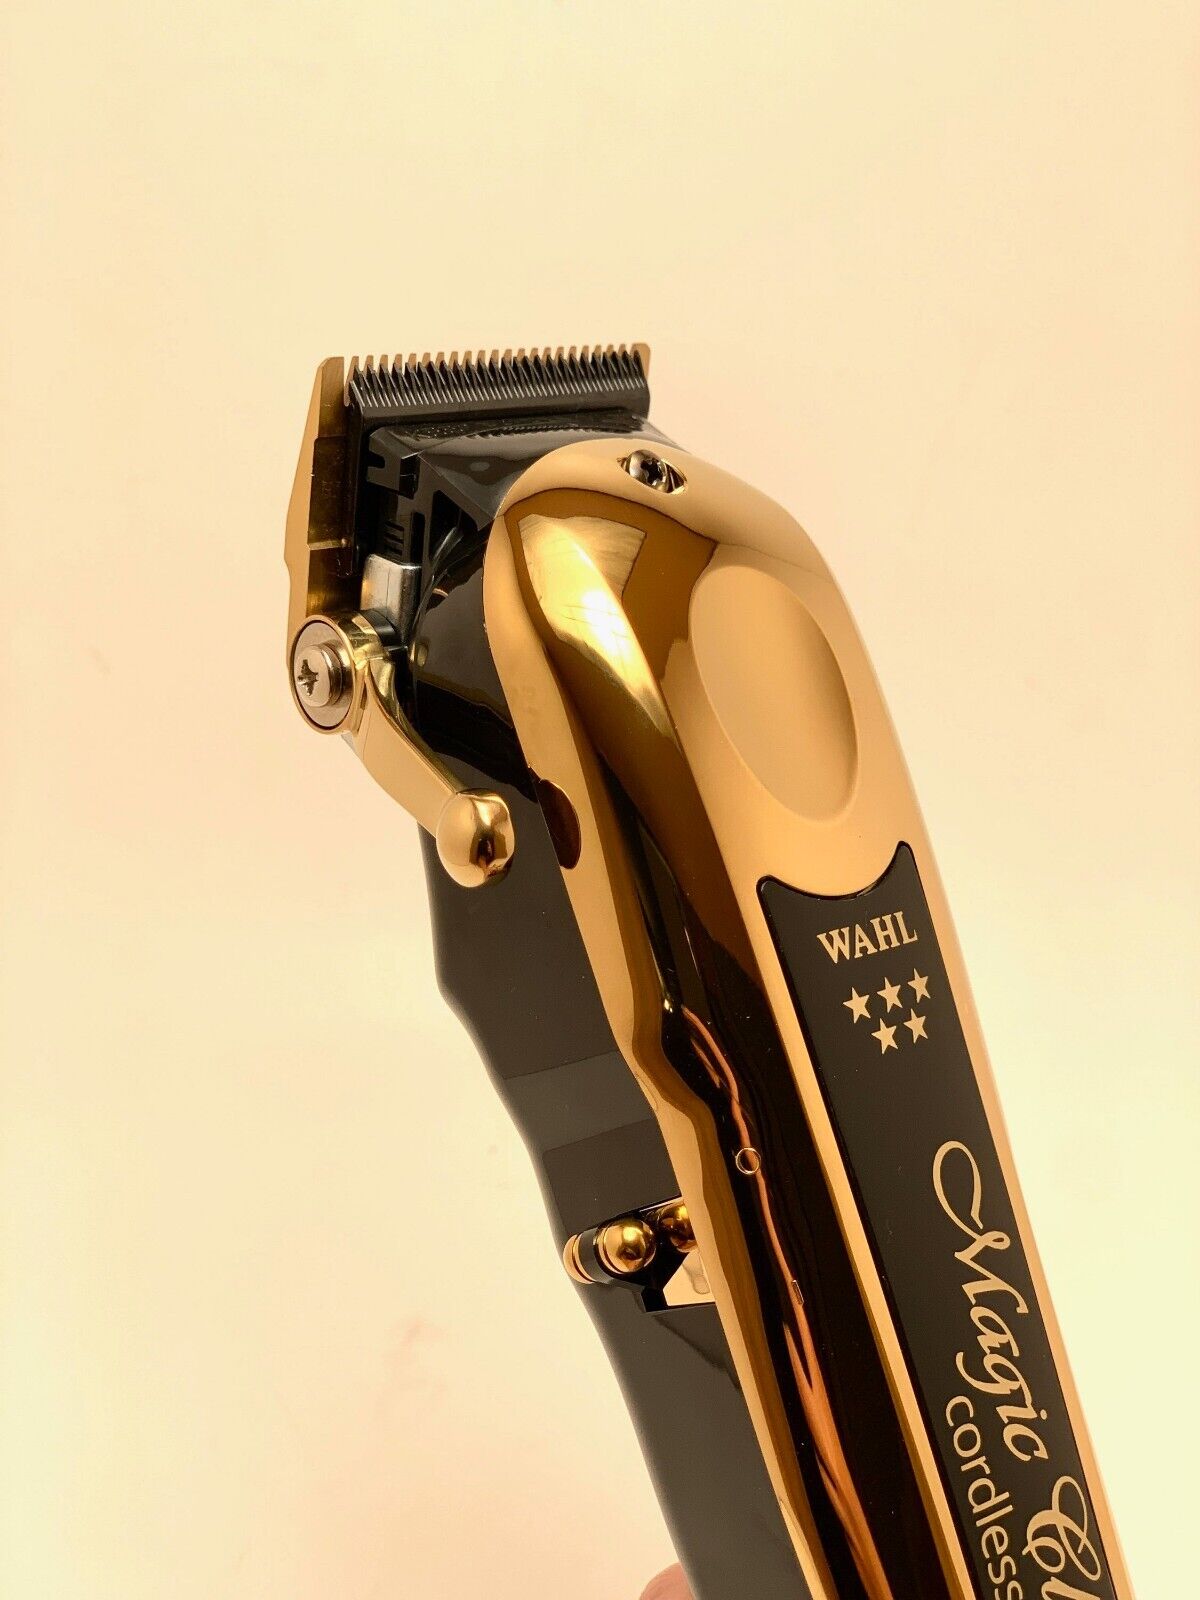  Wahl Professional 5 Star Gold Cordless Magic Clip Hair